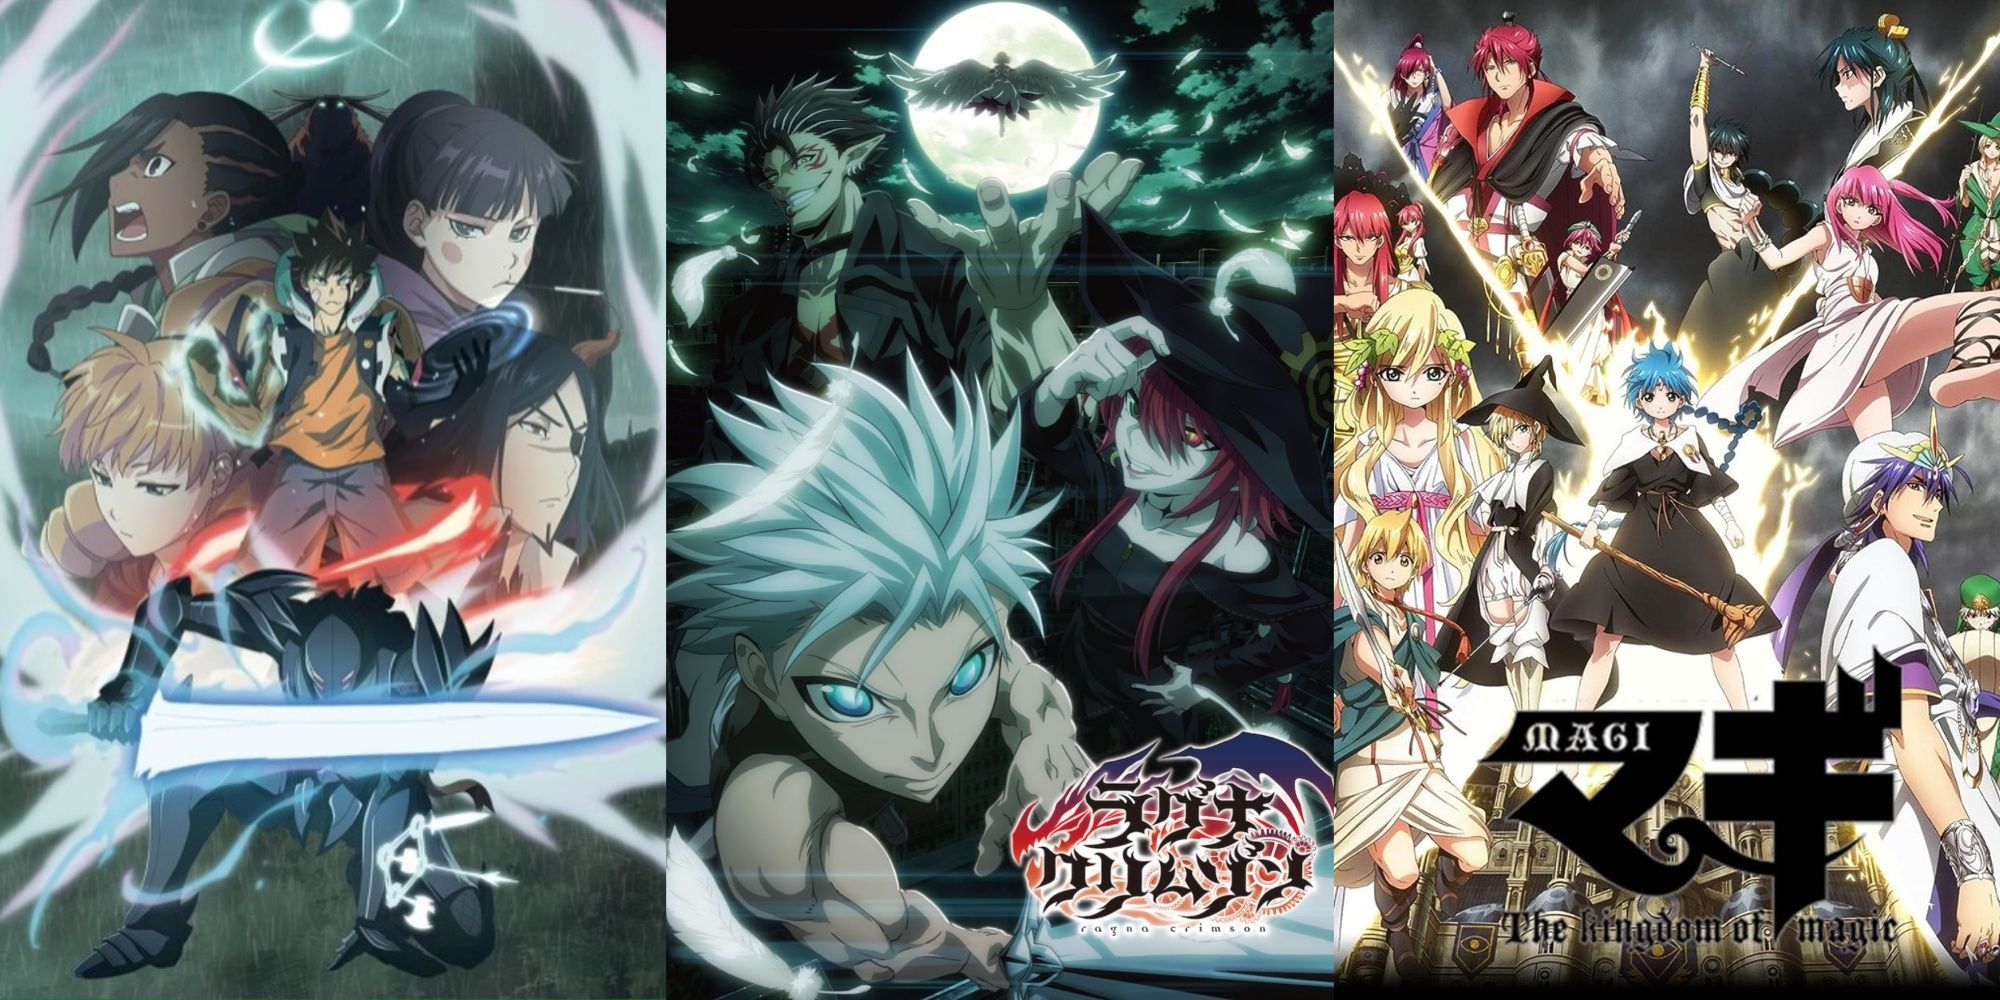 Ragna Crimson Dark Fantasy Manga Gets TV Anime in 2023 - QooApp News